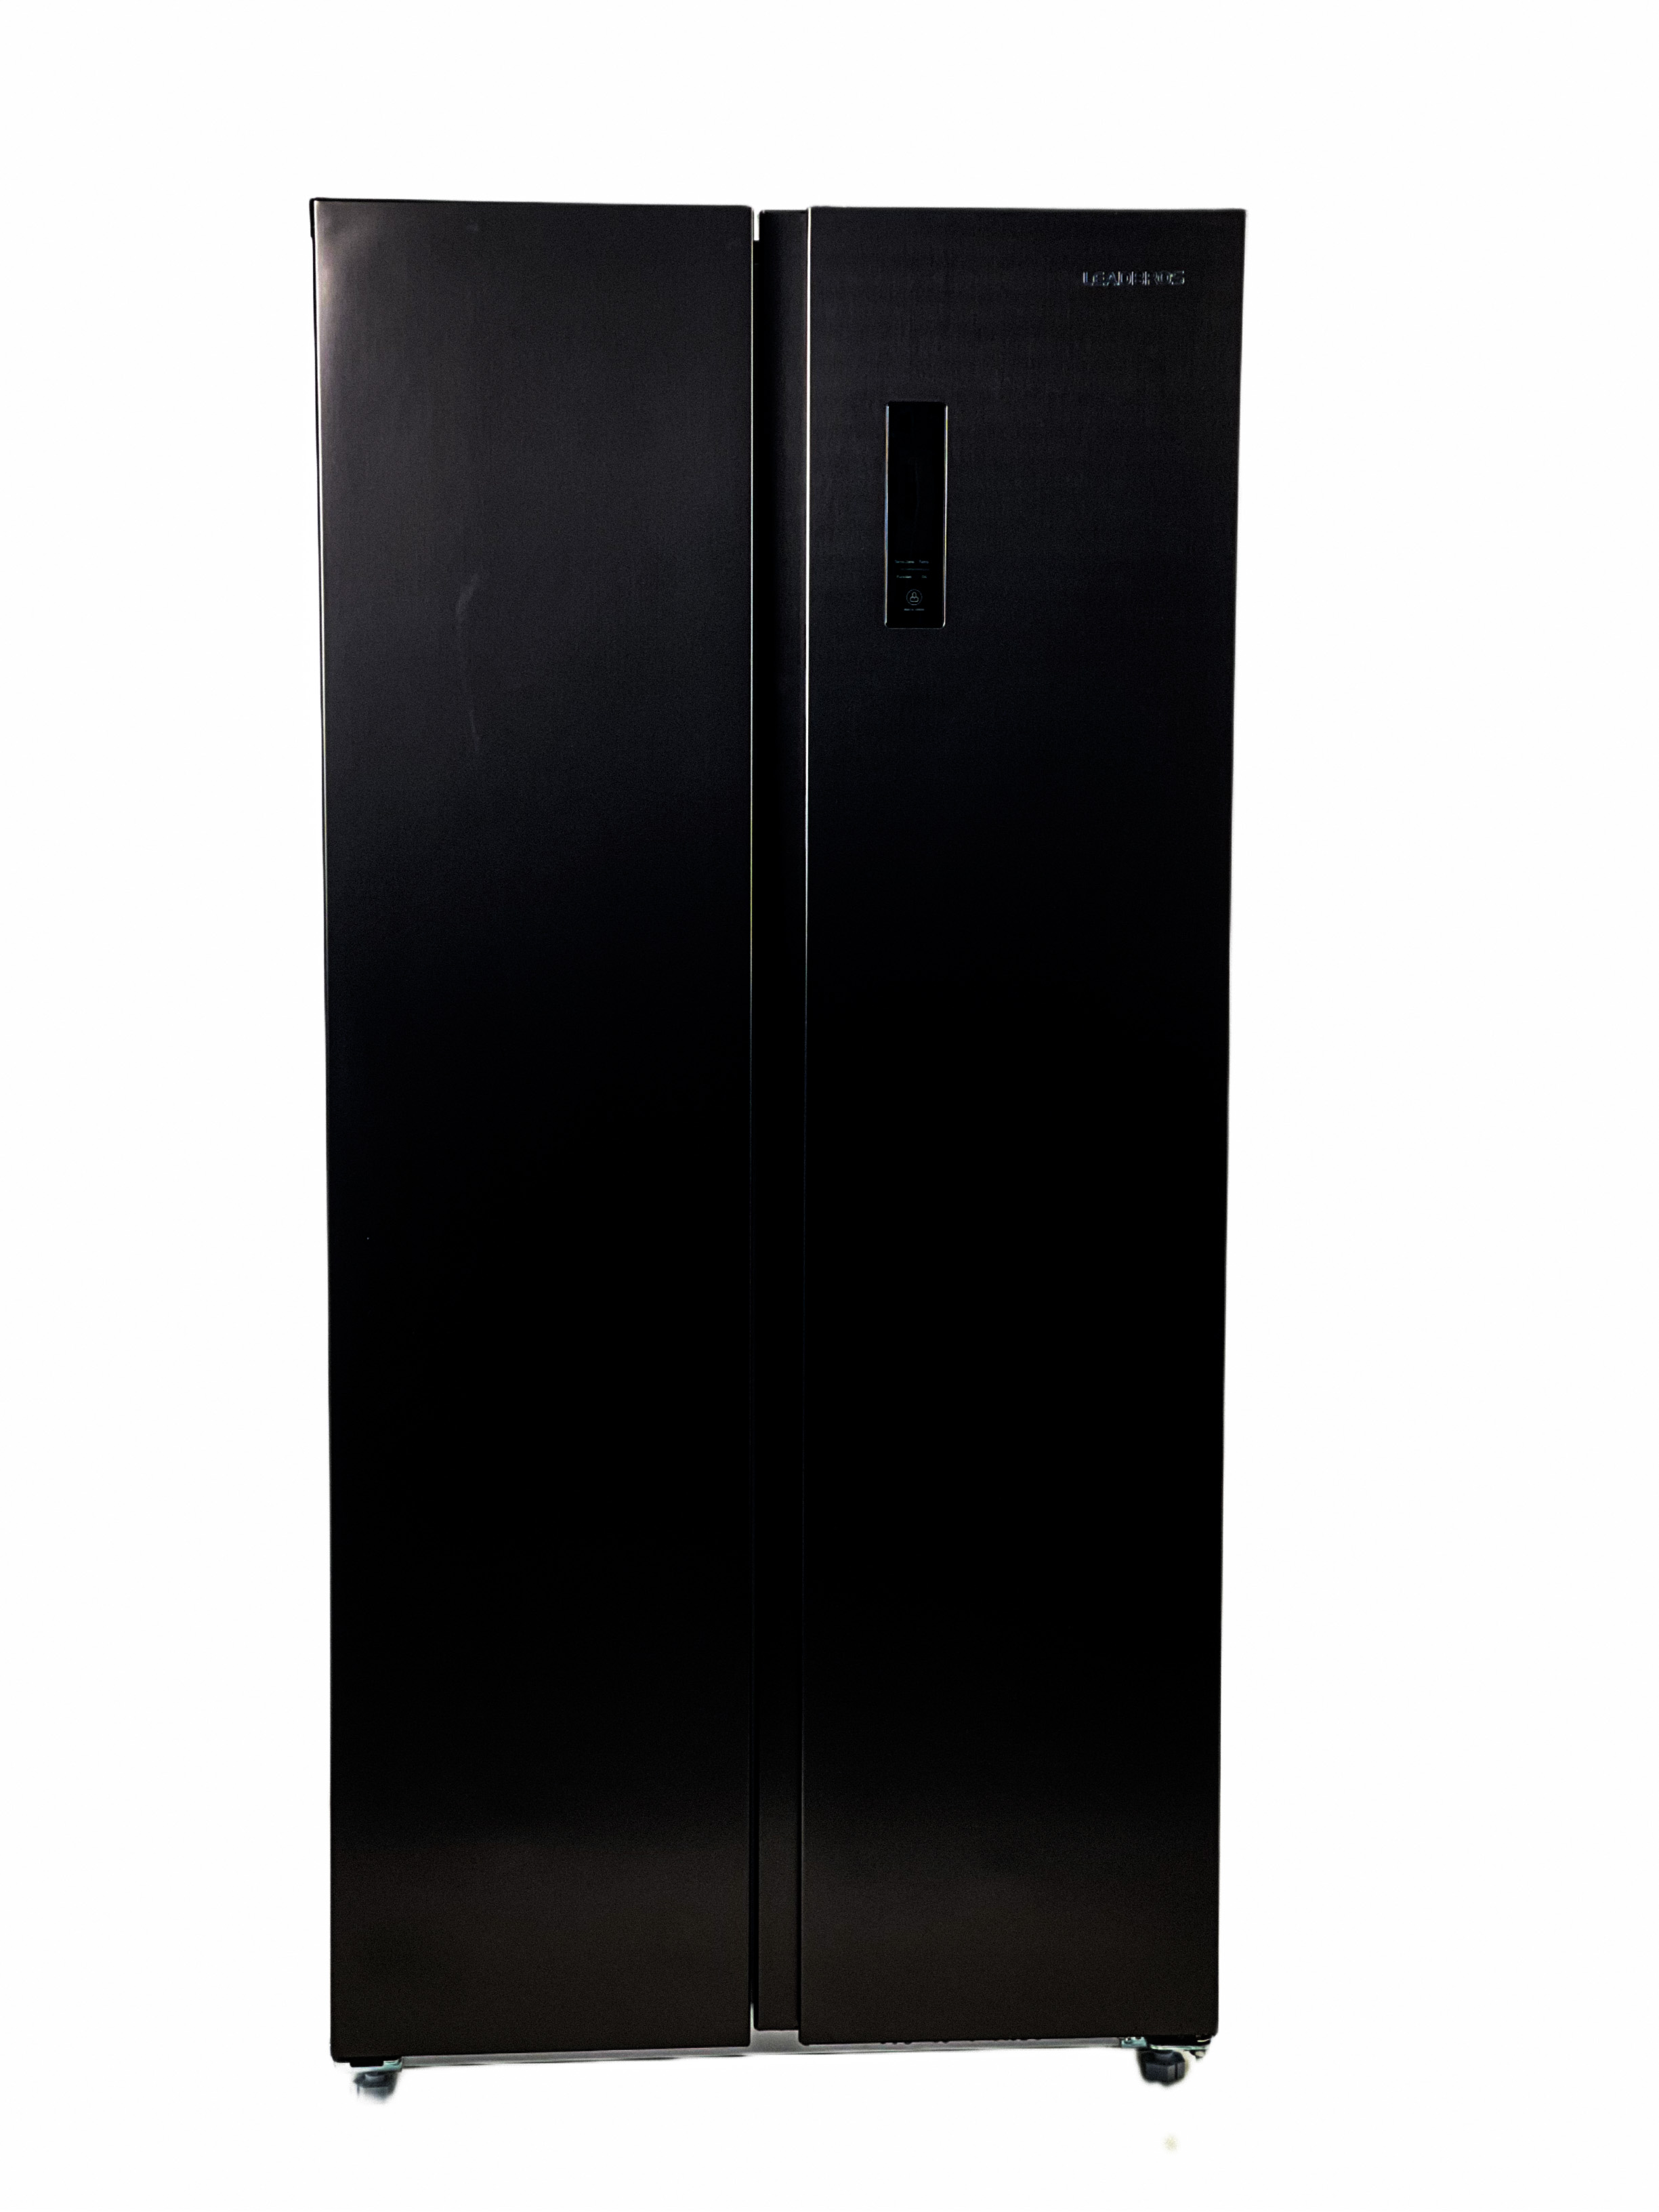 Витринный холодильник серия Standard - Холодильник HD-467